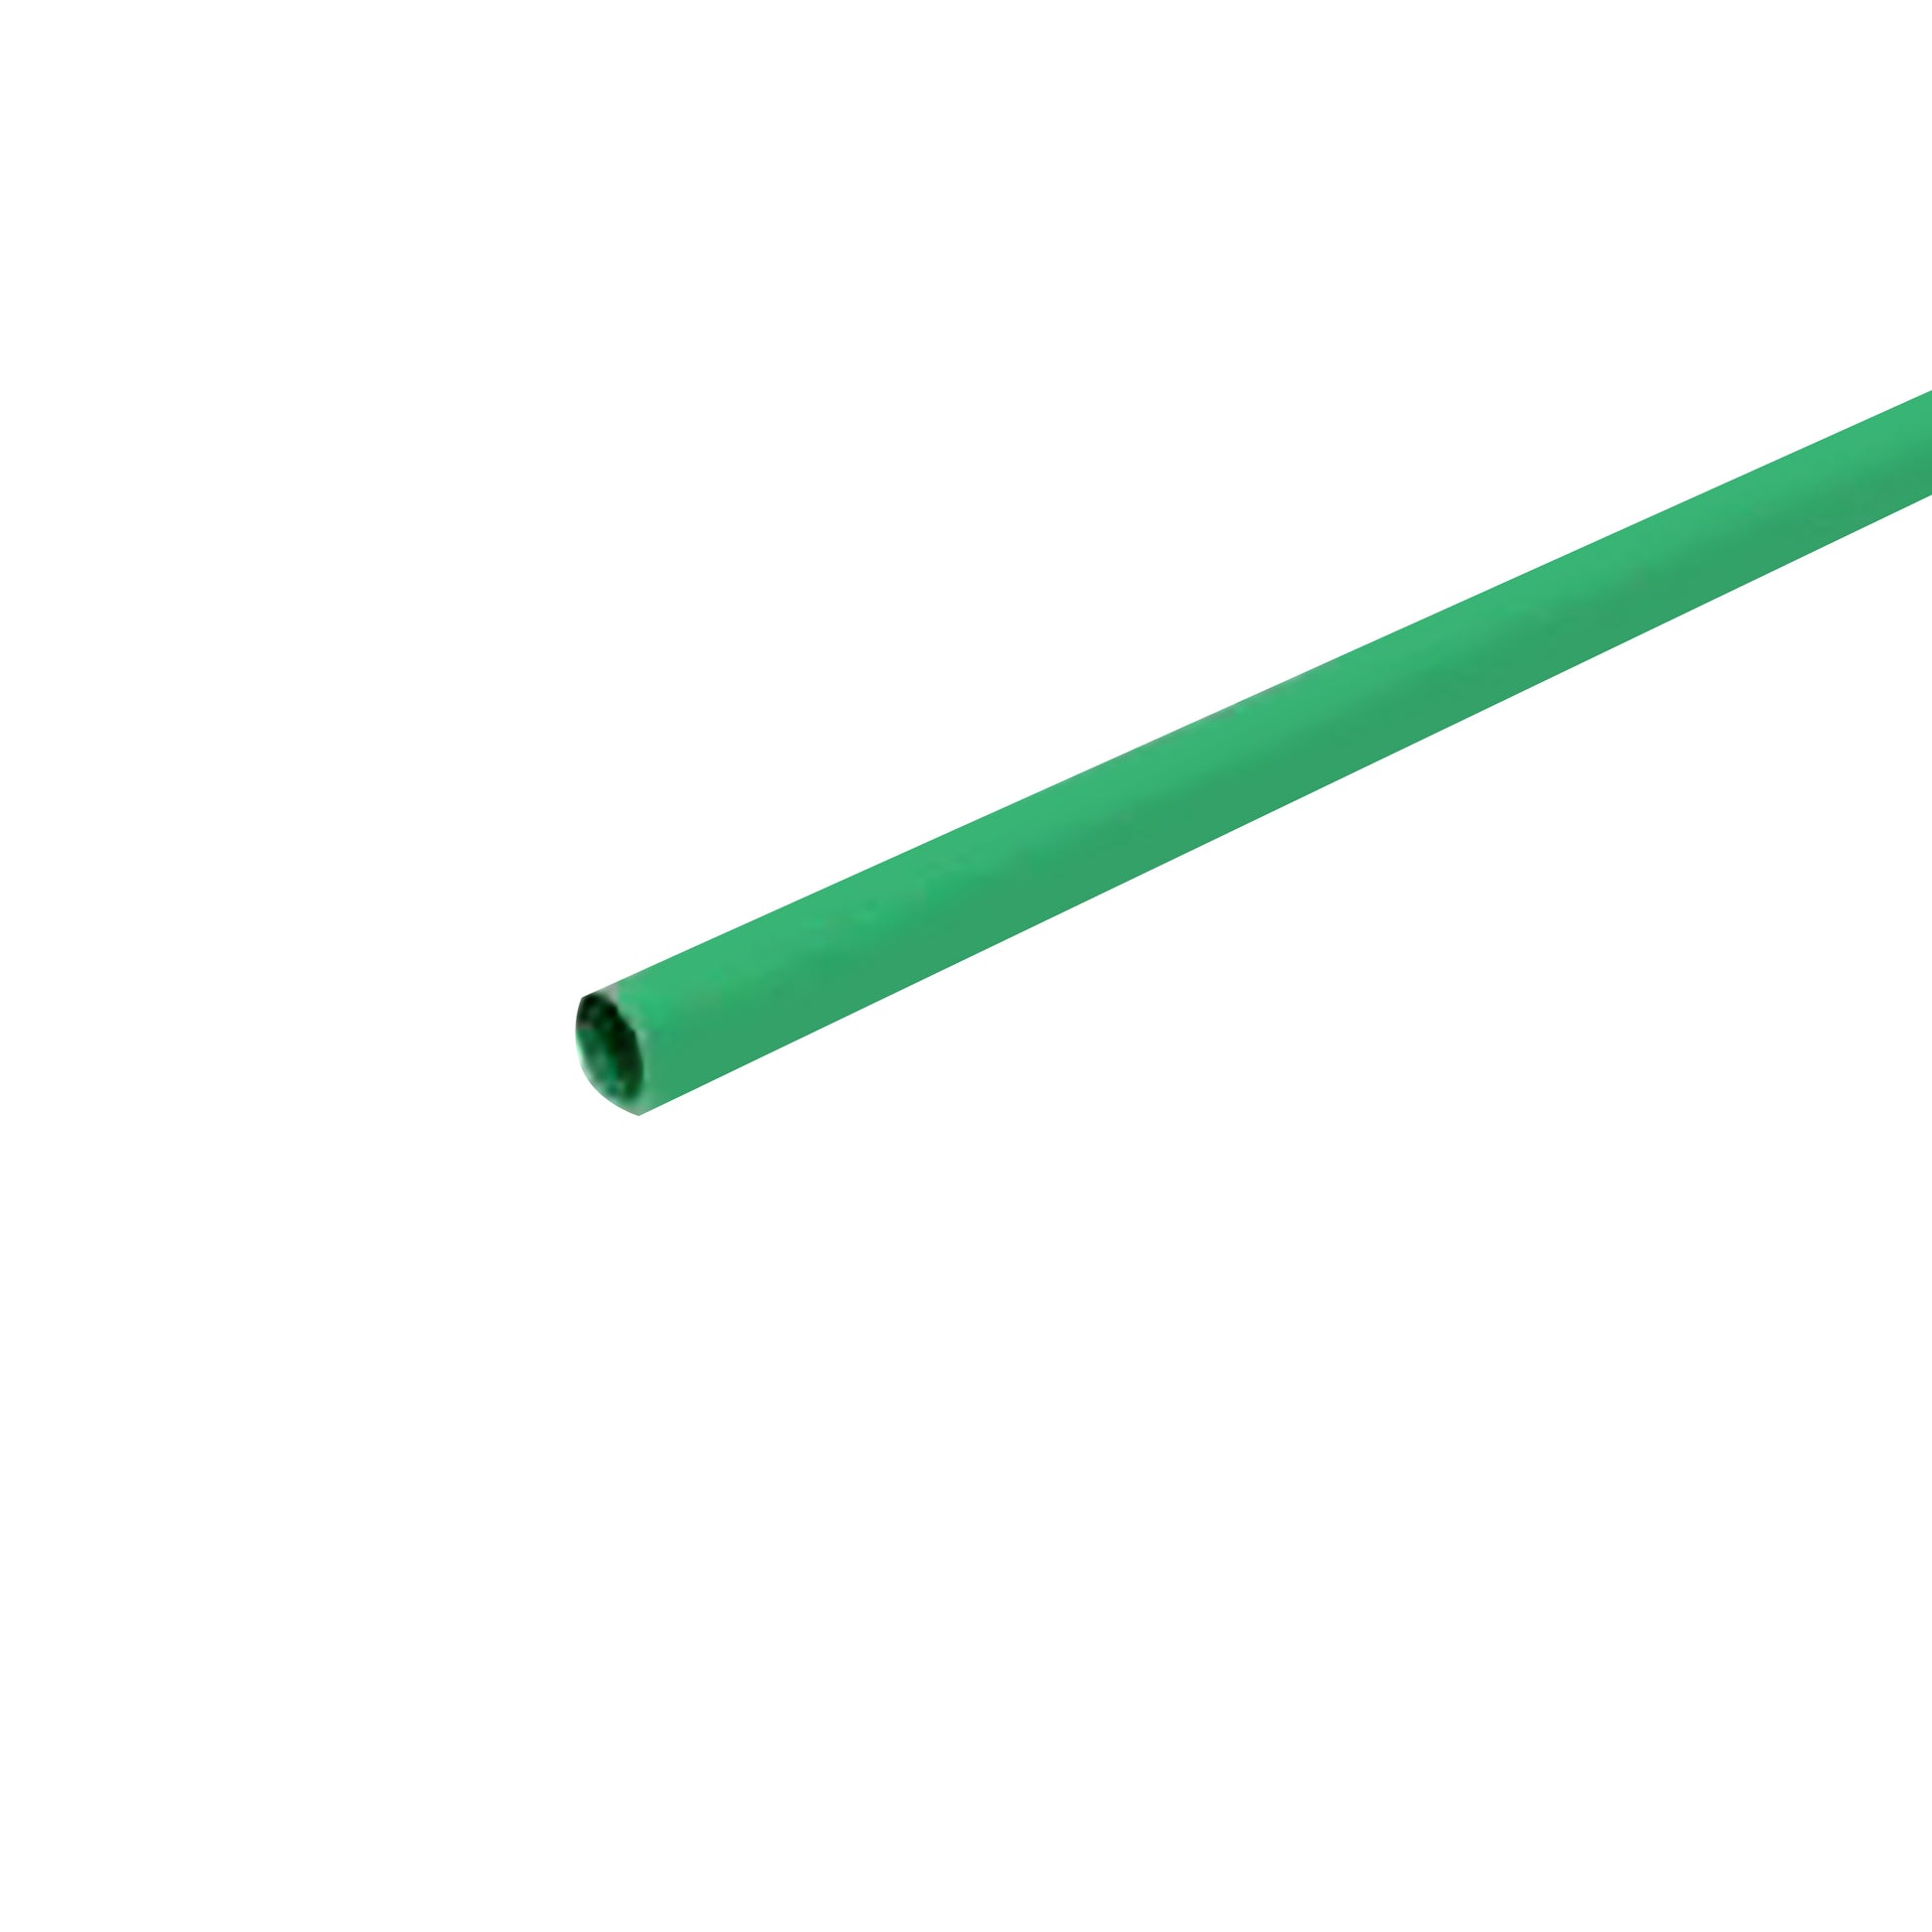 Flexible Thin Single Wall Non-Adhesive Heat Shrink Tubing 2:1 Green 3/8" ID - 12" Inch 10 Pack